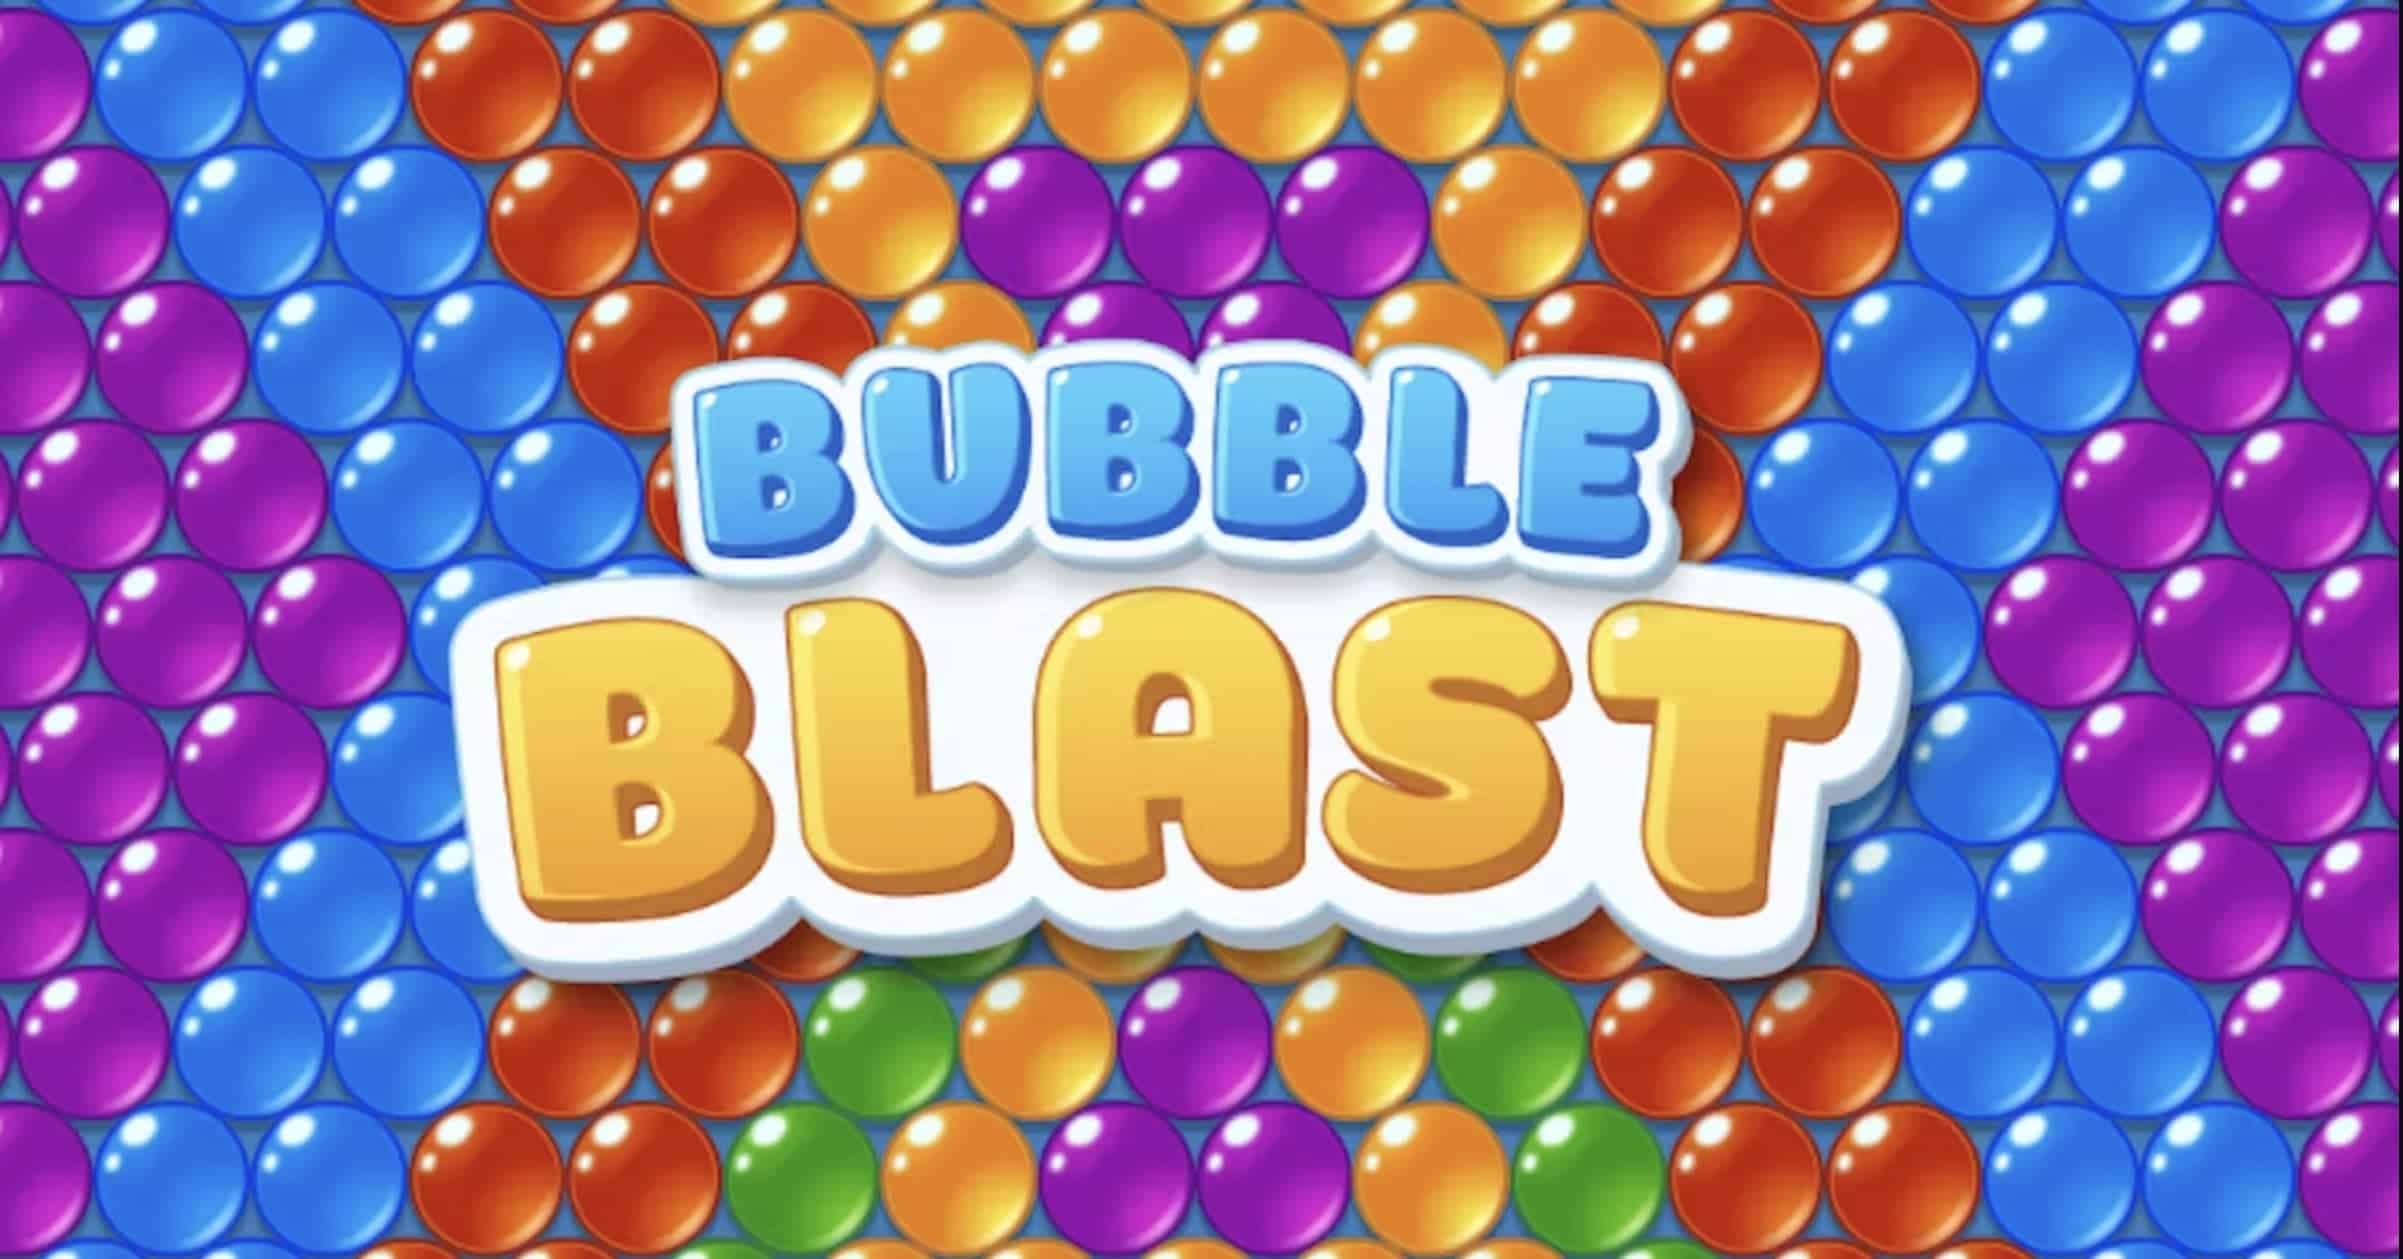 Melhores jogos Bubble Shooter para Android